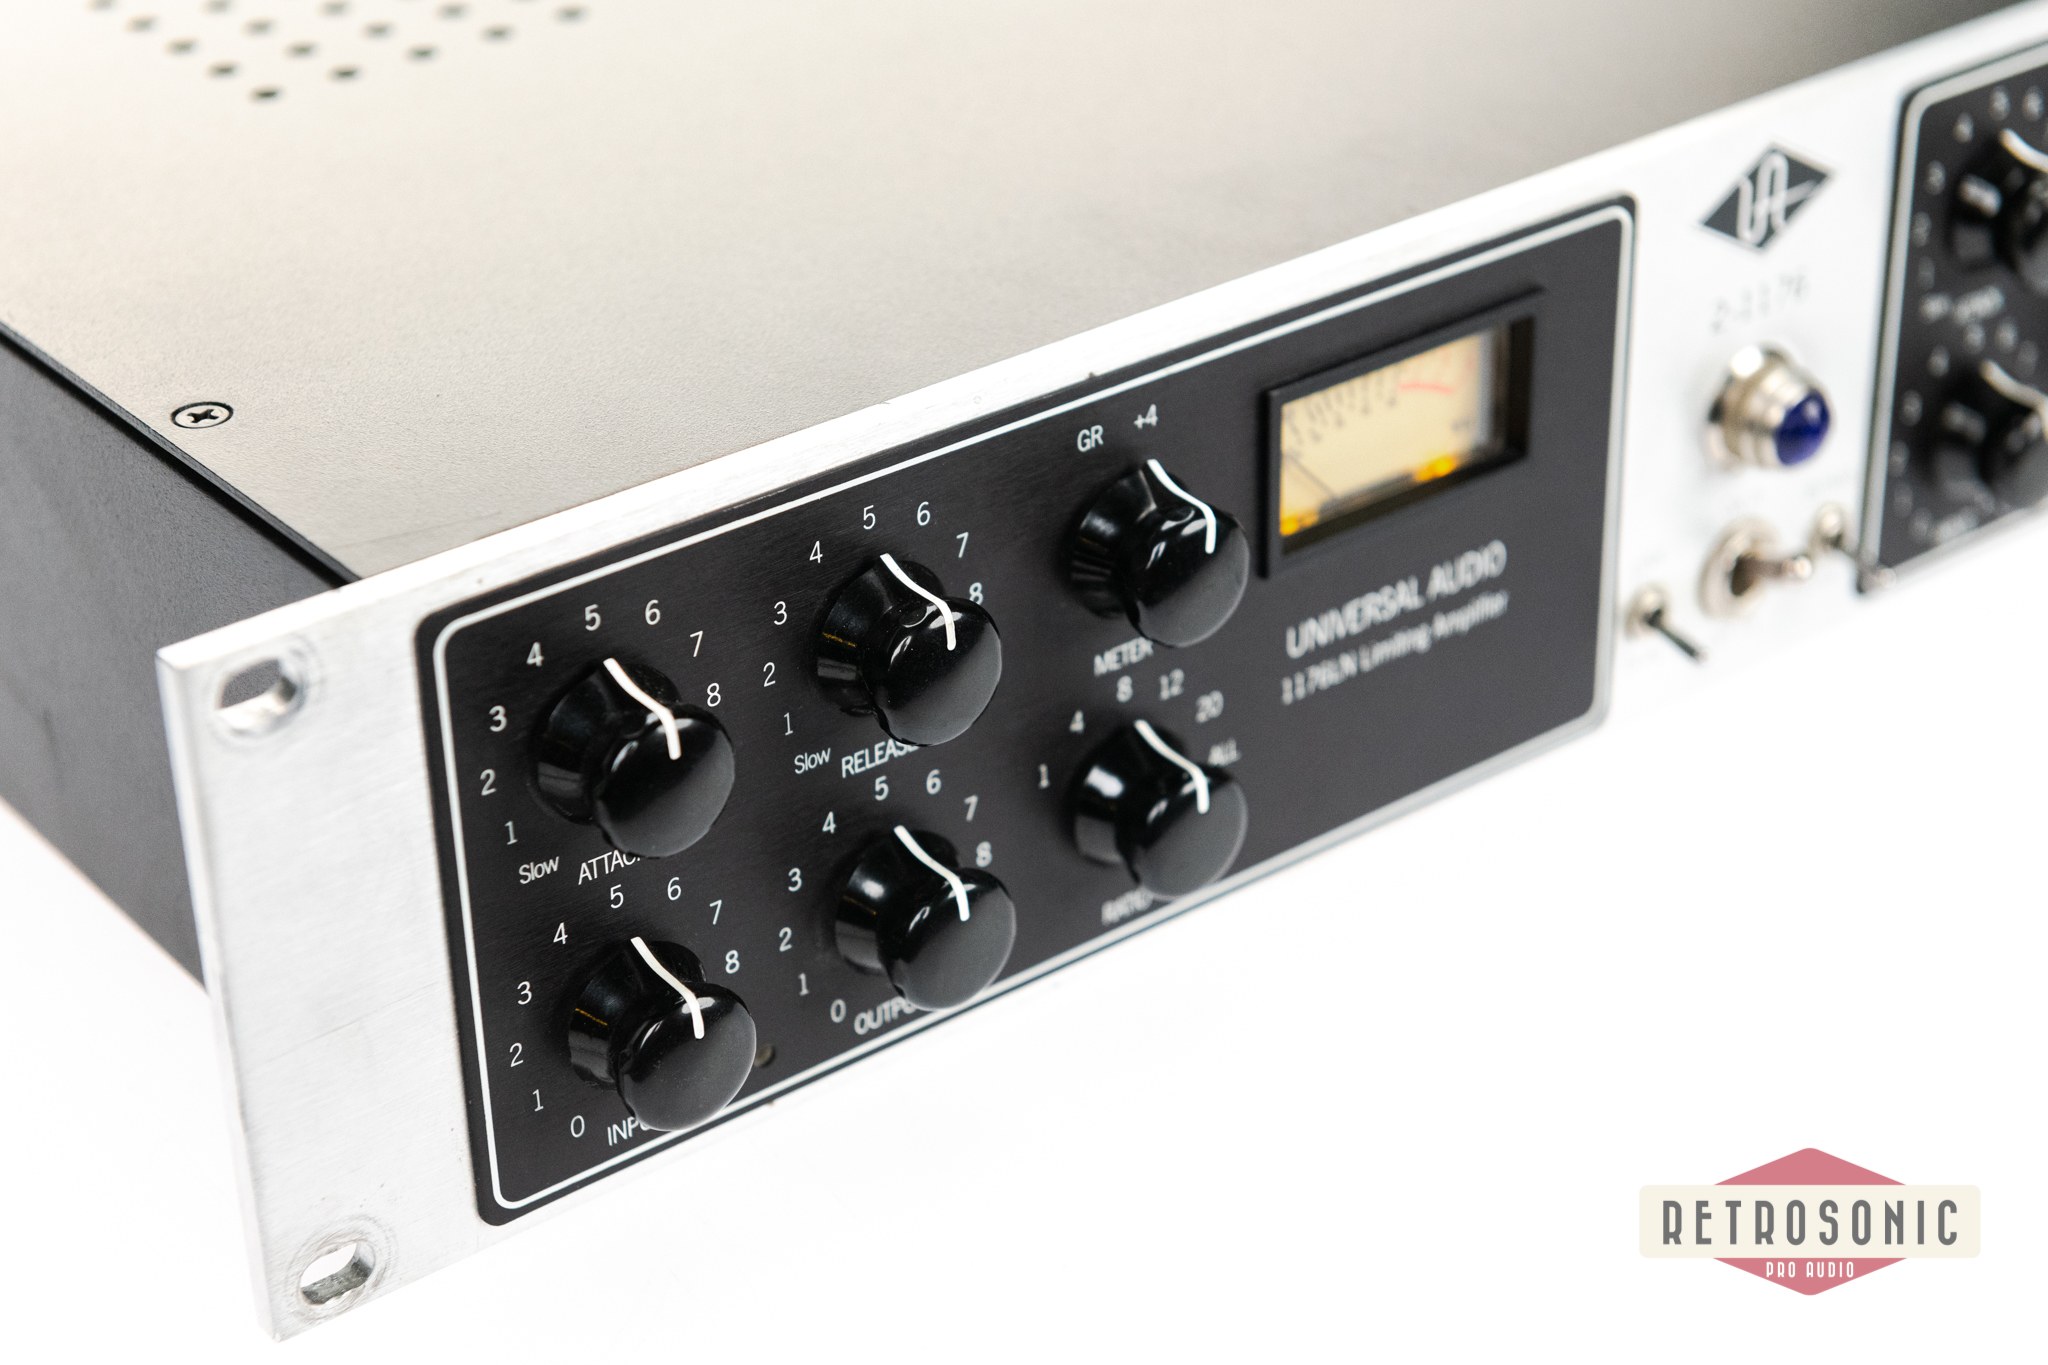 Universal Audio 2-1176 Dual Limiting Amplifier #2